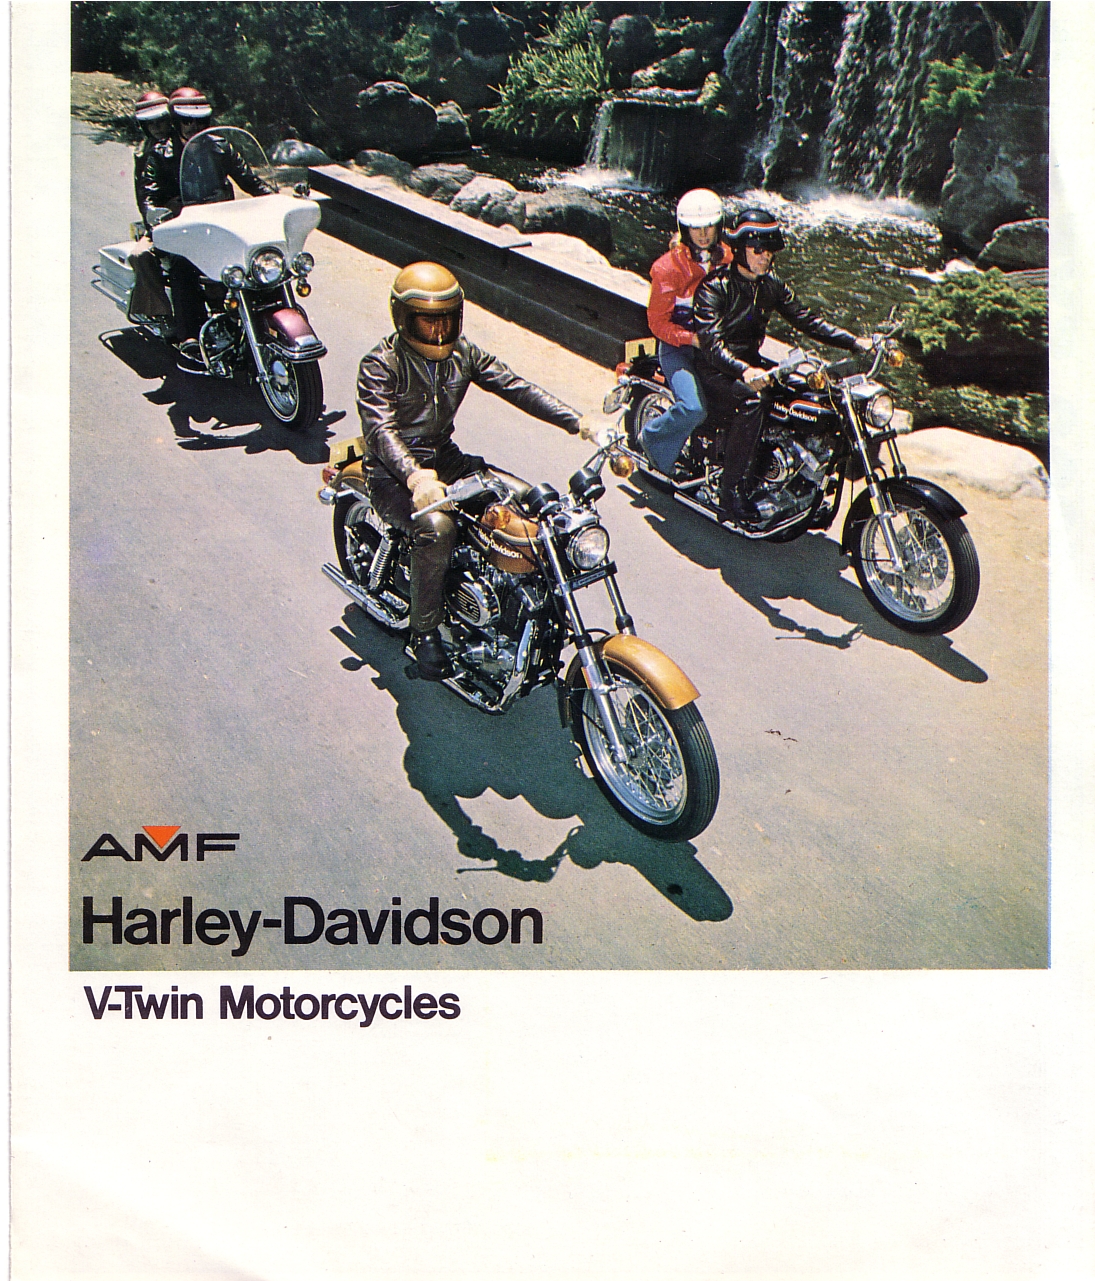 Red Devil Motors 1975 Harley Davidson brochure